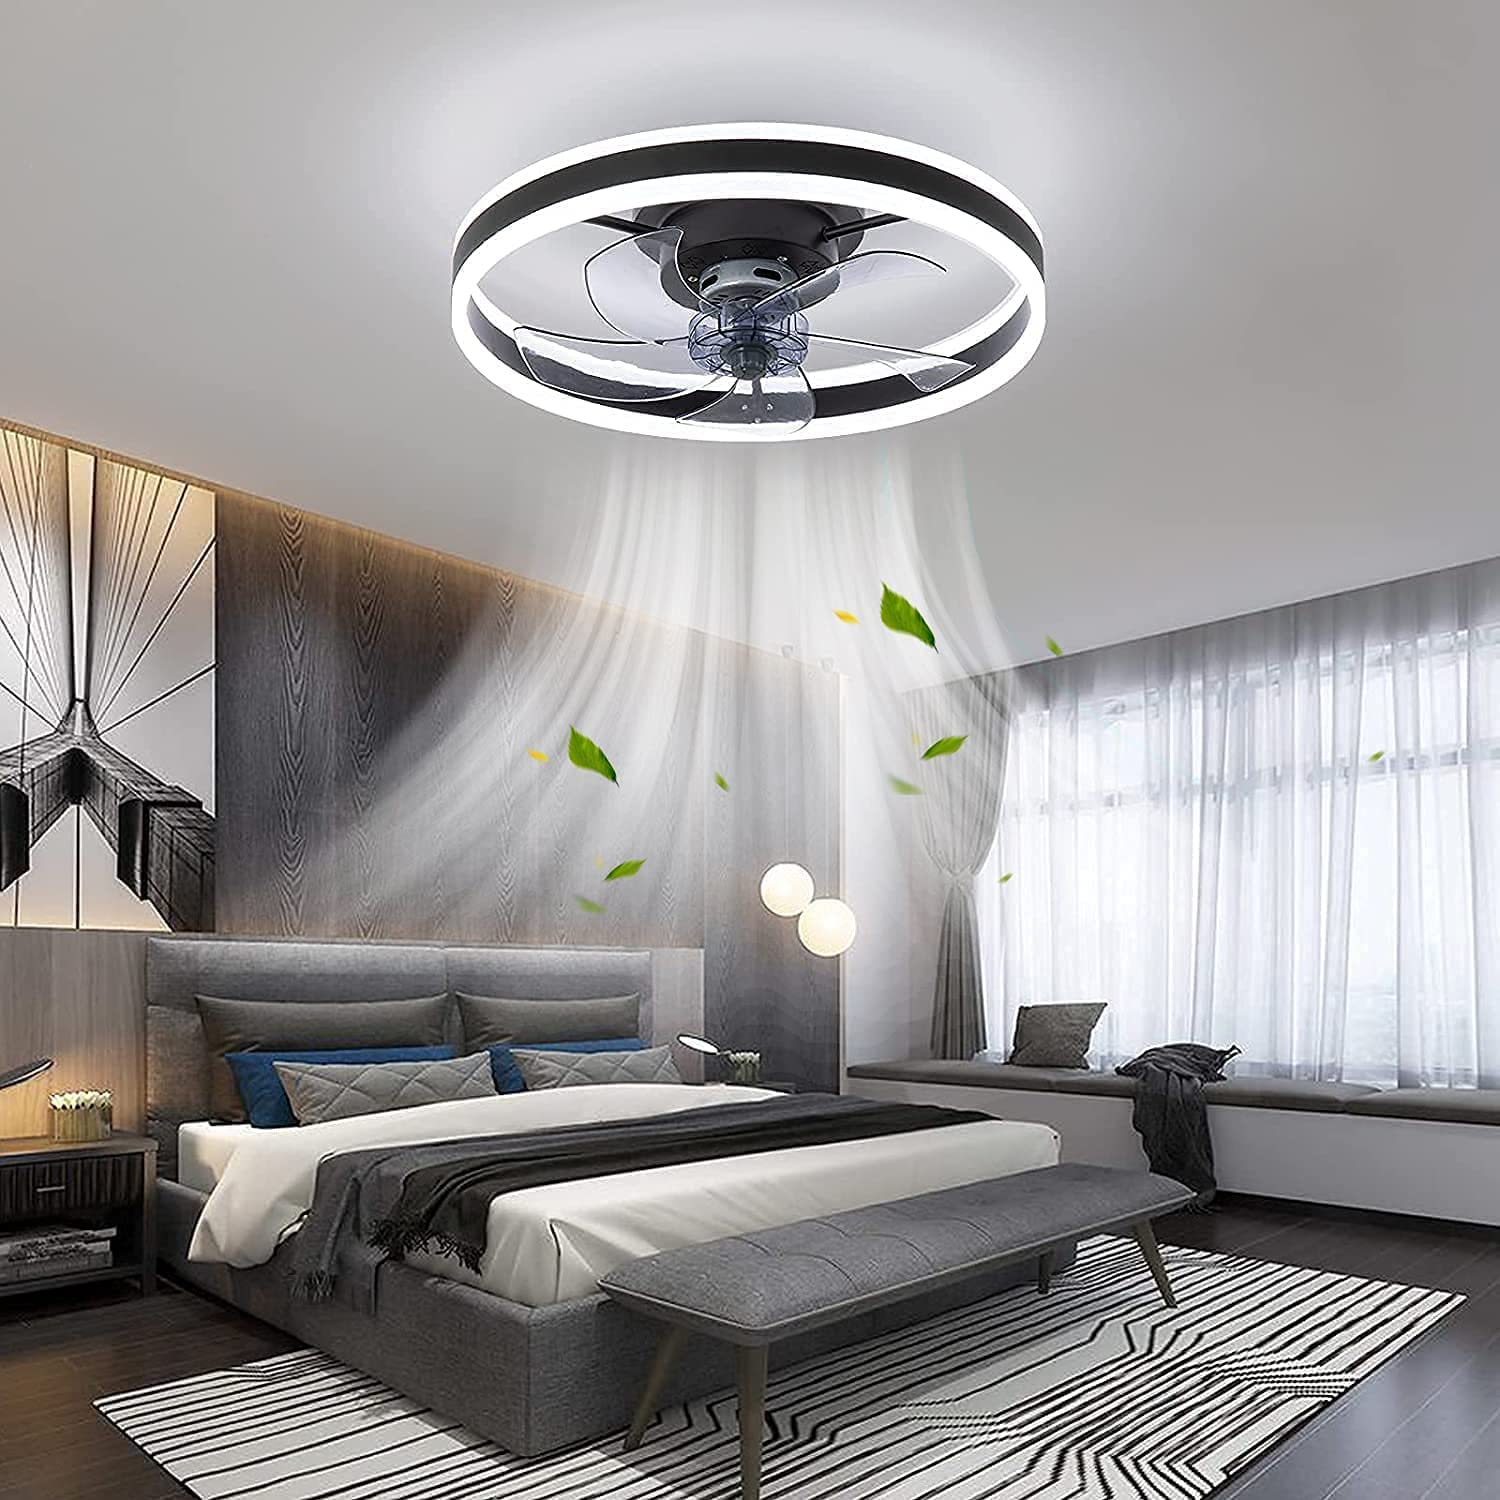 پنکه سقفی Ceiling Fan with Remote Control  Dimmable LED - ارسال ۱۰ الی ۱۵ روز کاری